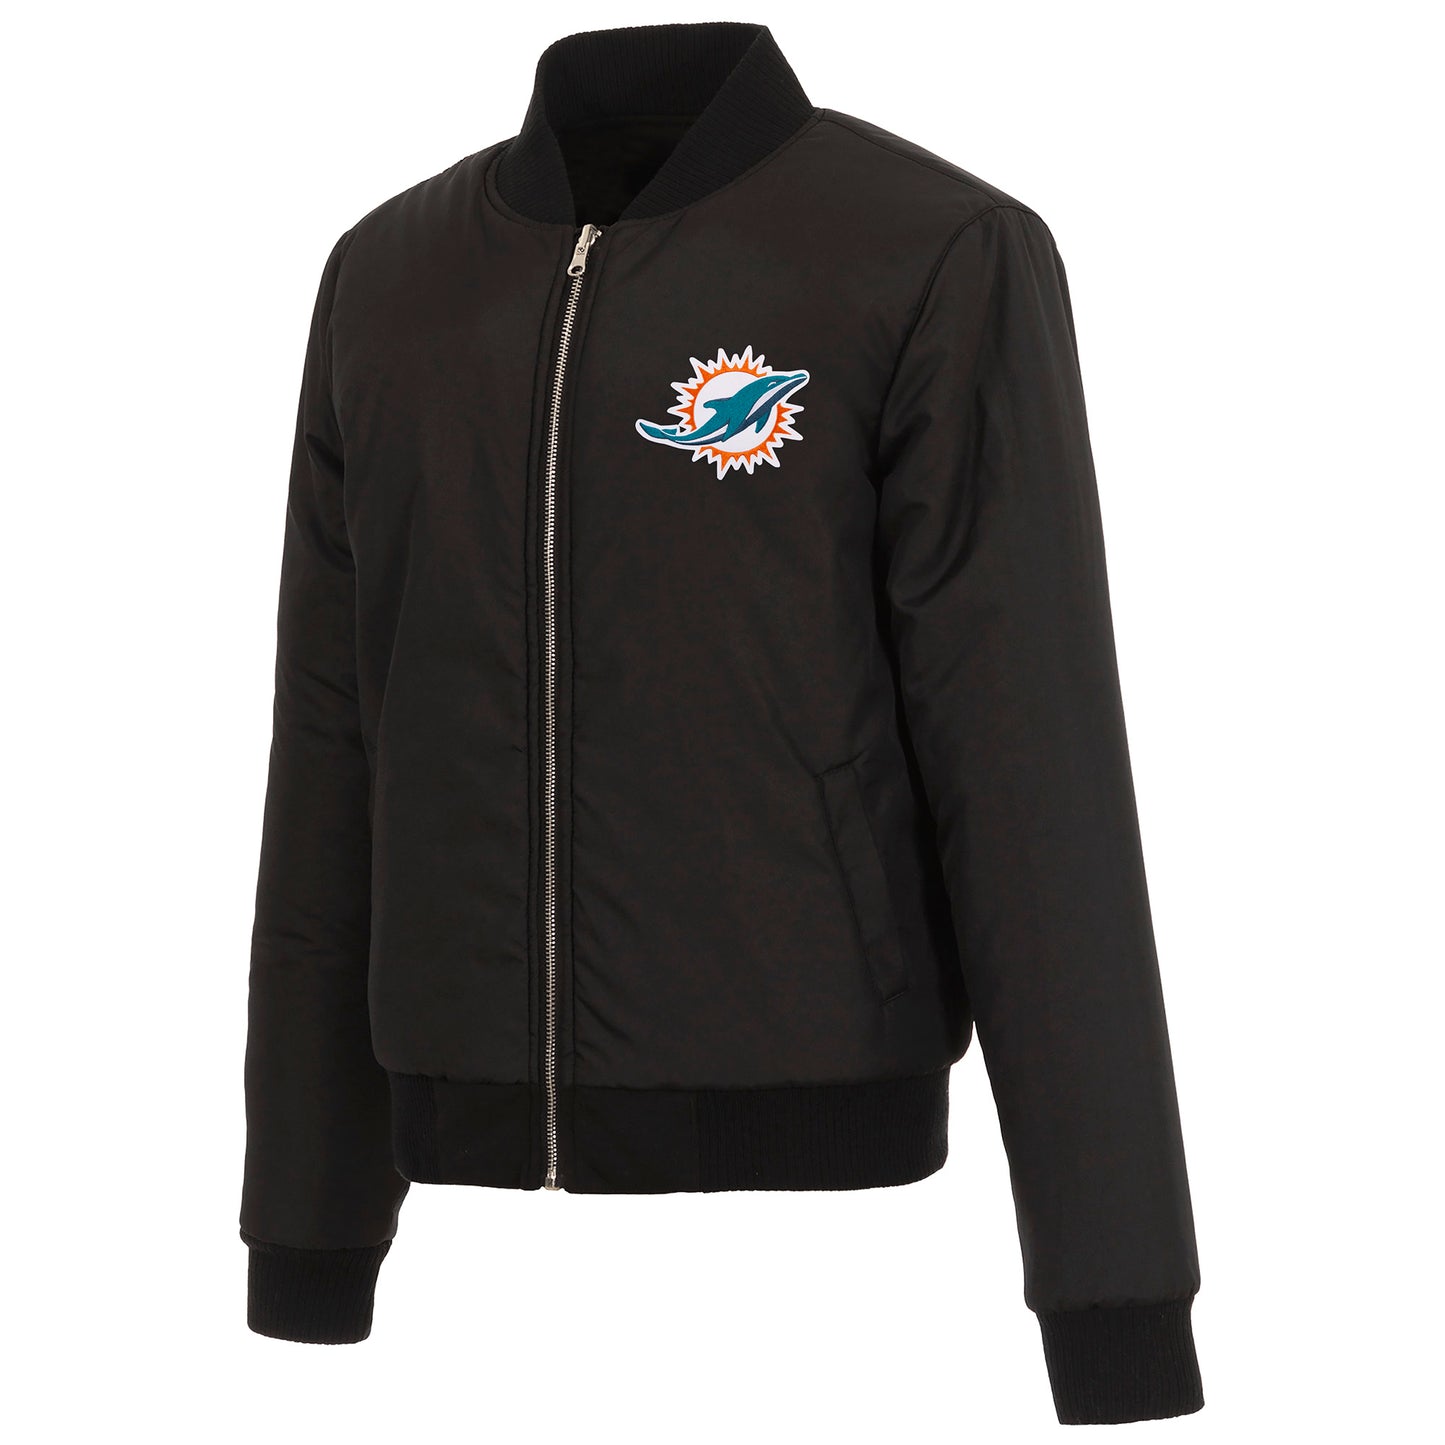 Miami Dolphins Ladies Reversible Fleece Jacket